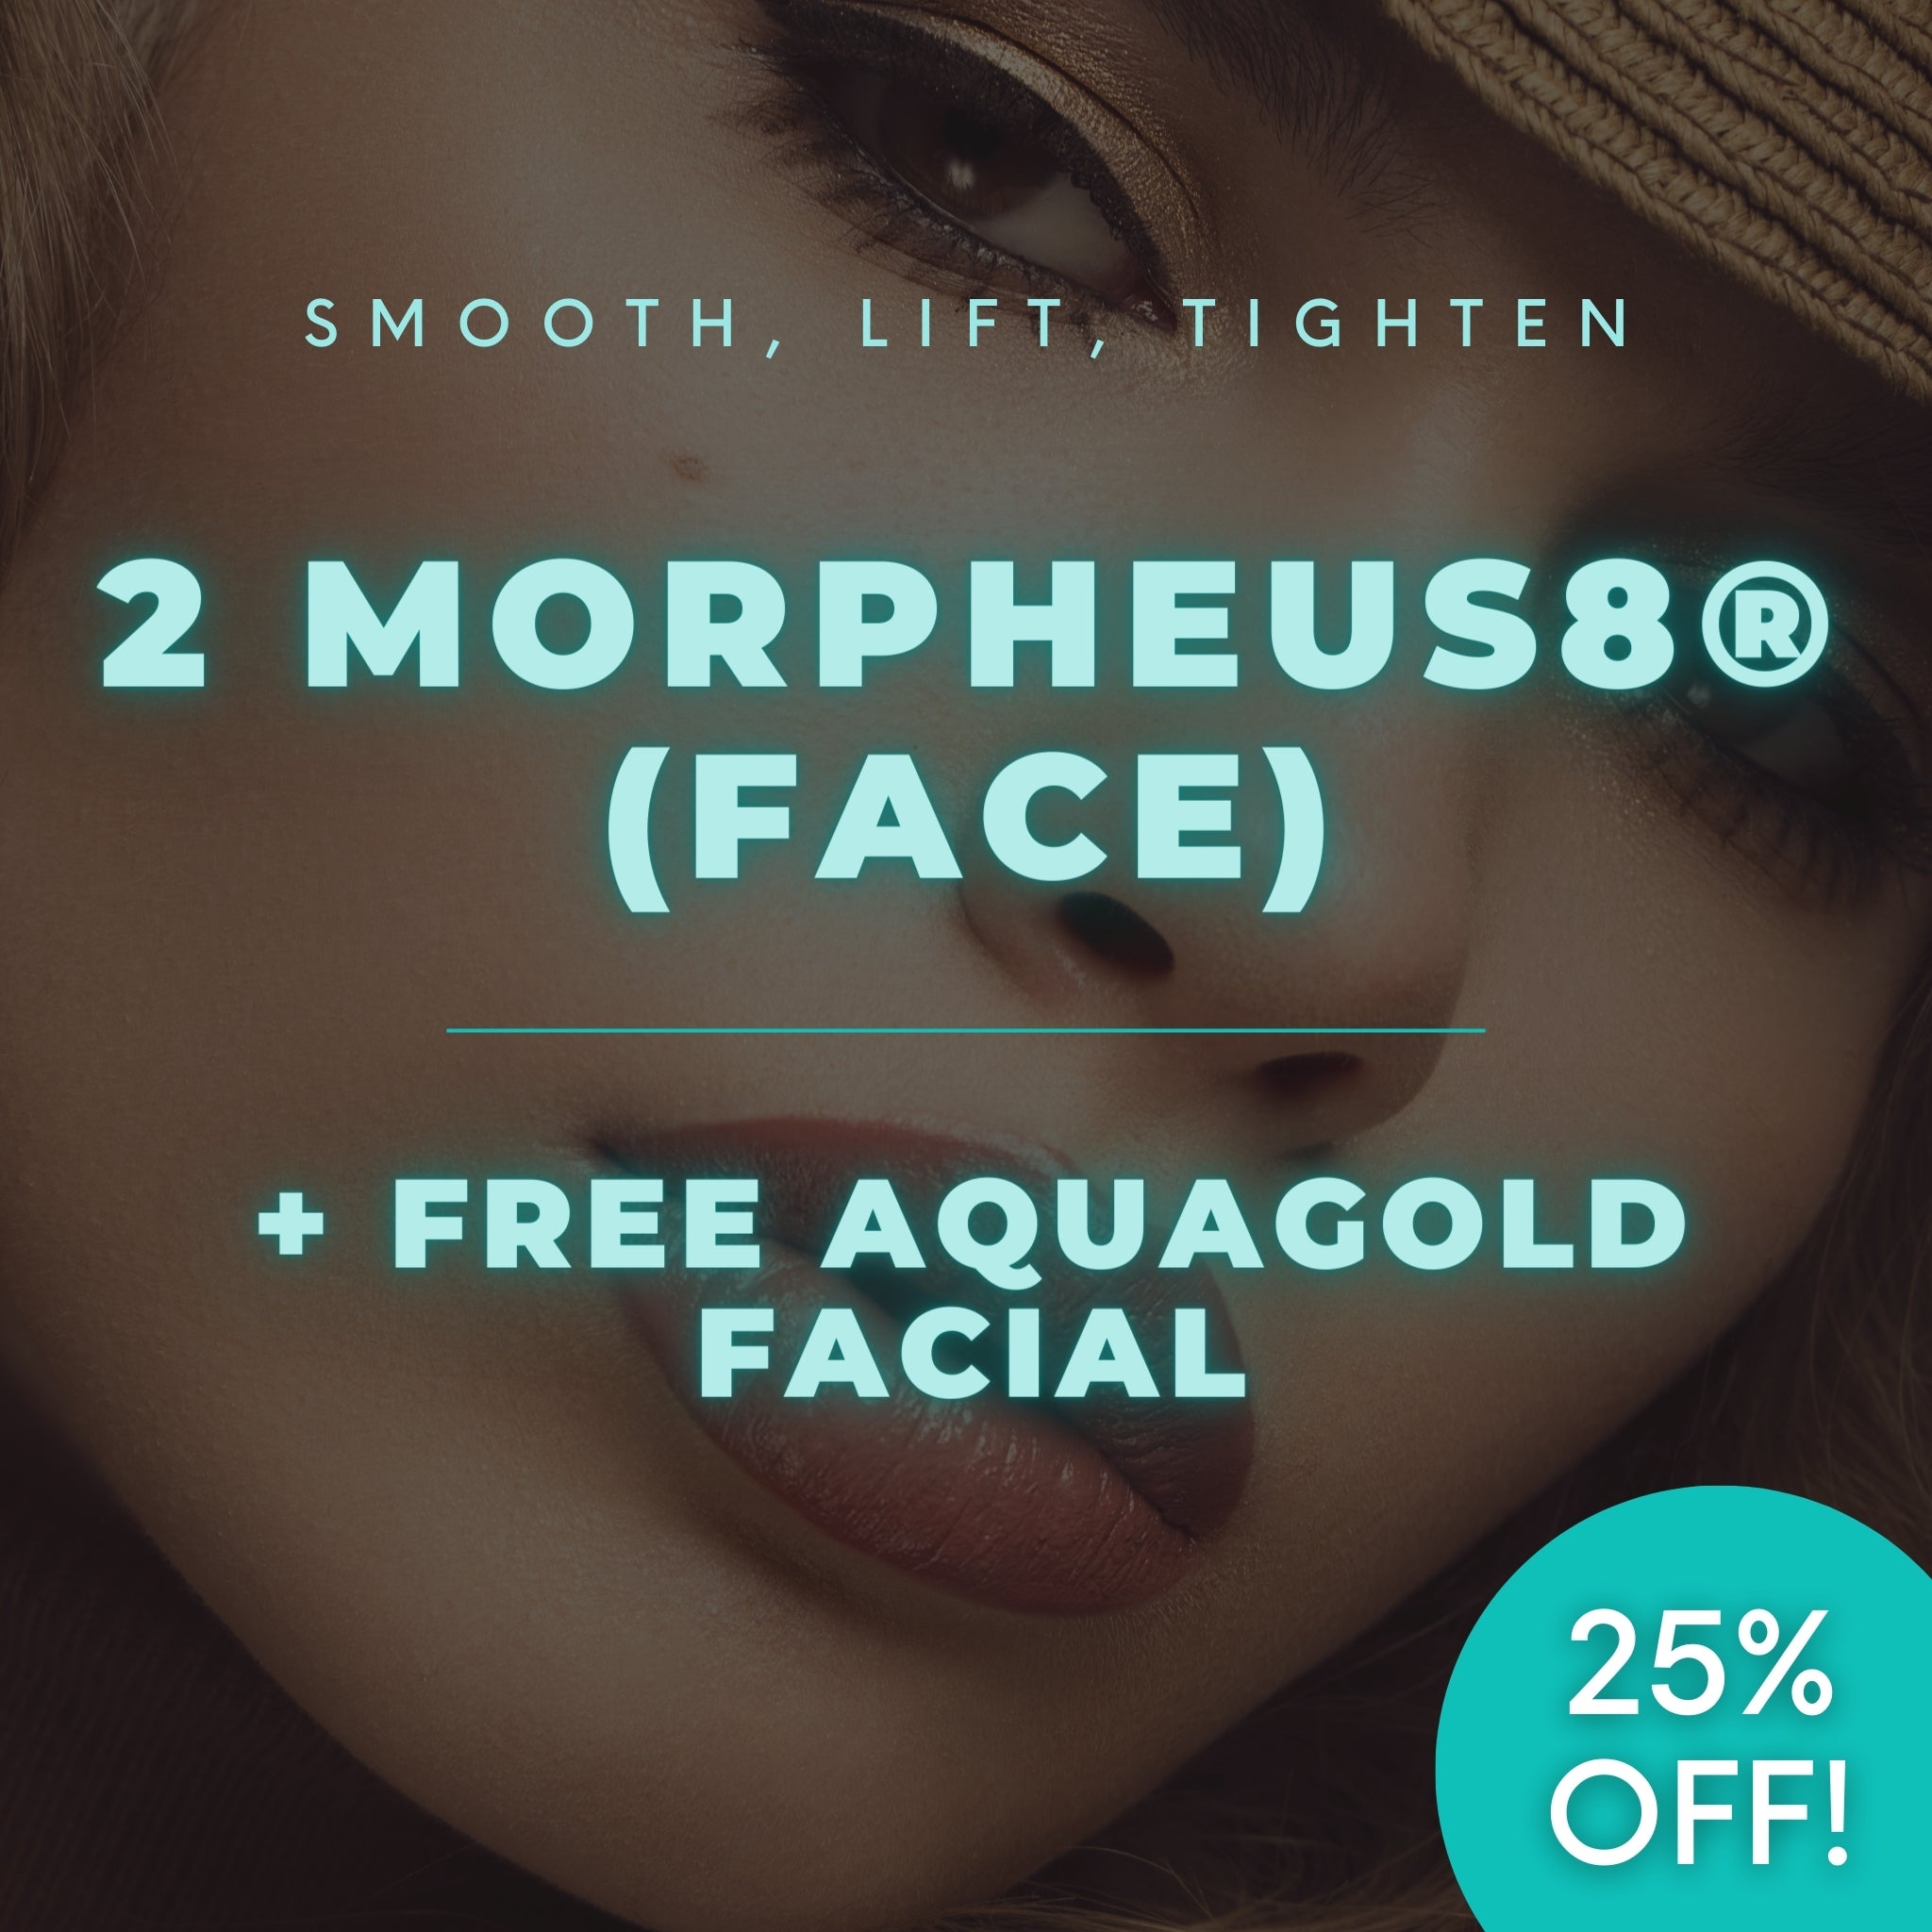 Morpheus8® Face Resurfacing 2-Pack + 1 FREE AquaGold Facial